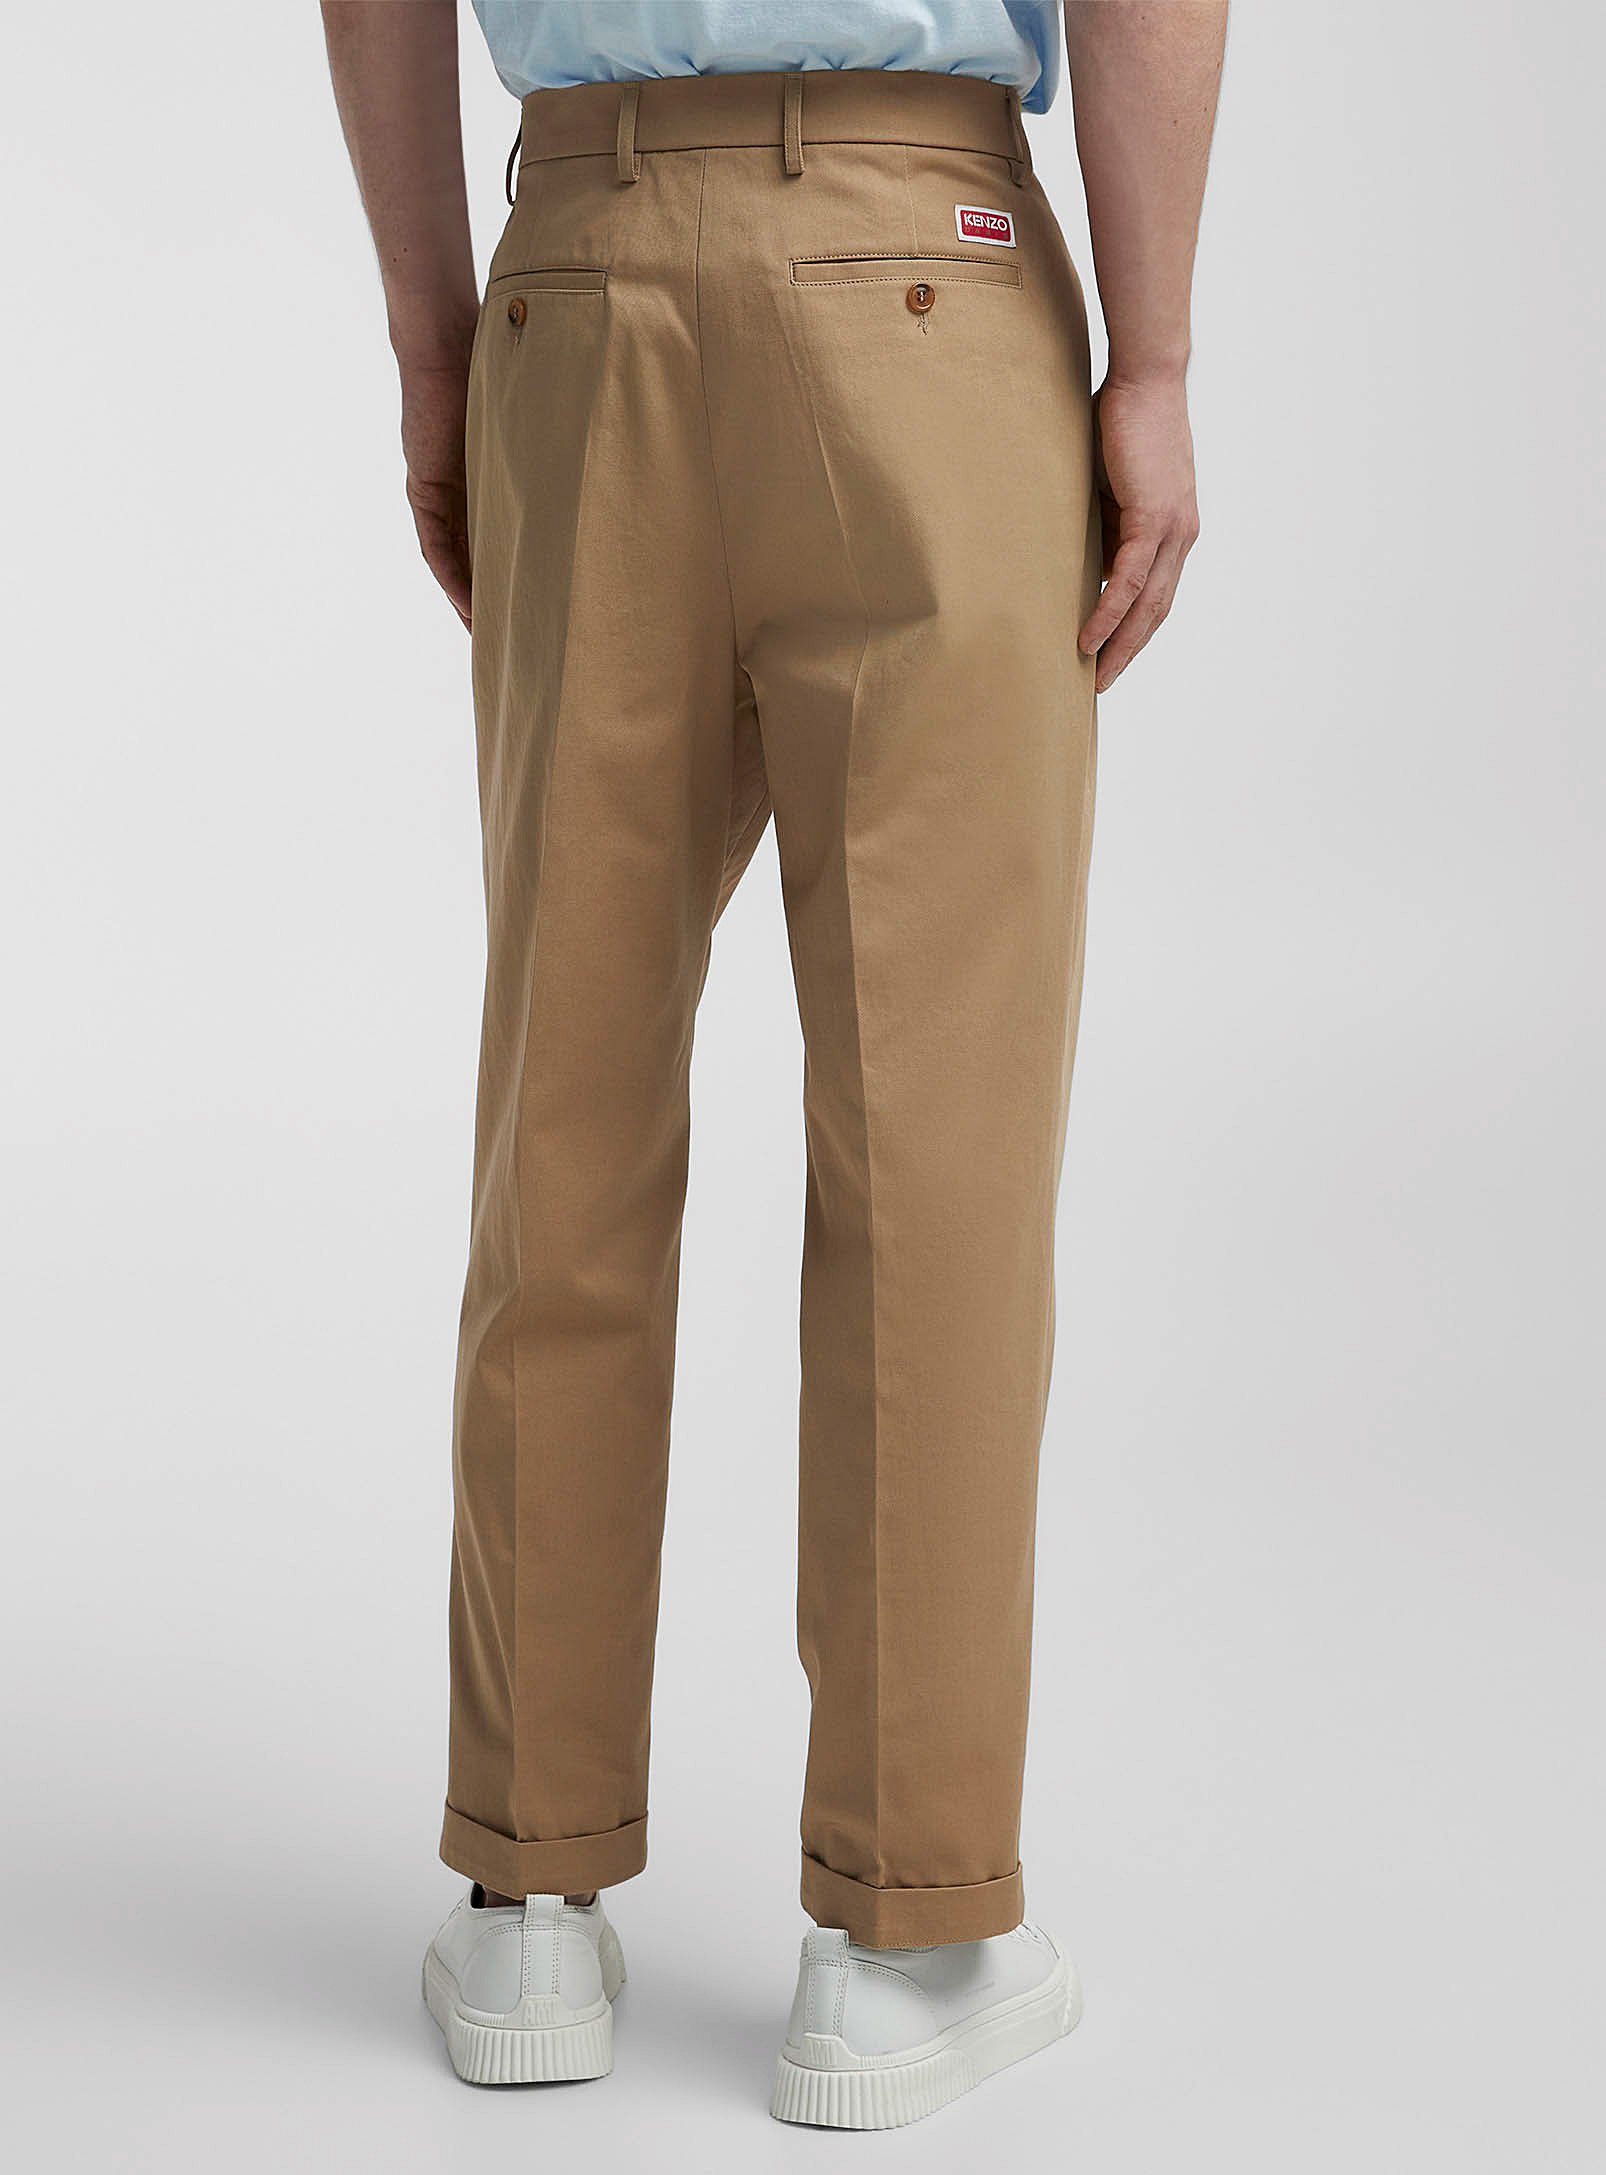 Kenzo - Le pantalon chino Classic beige sable